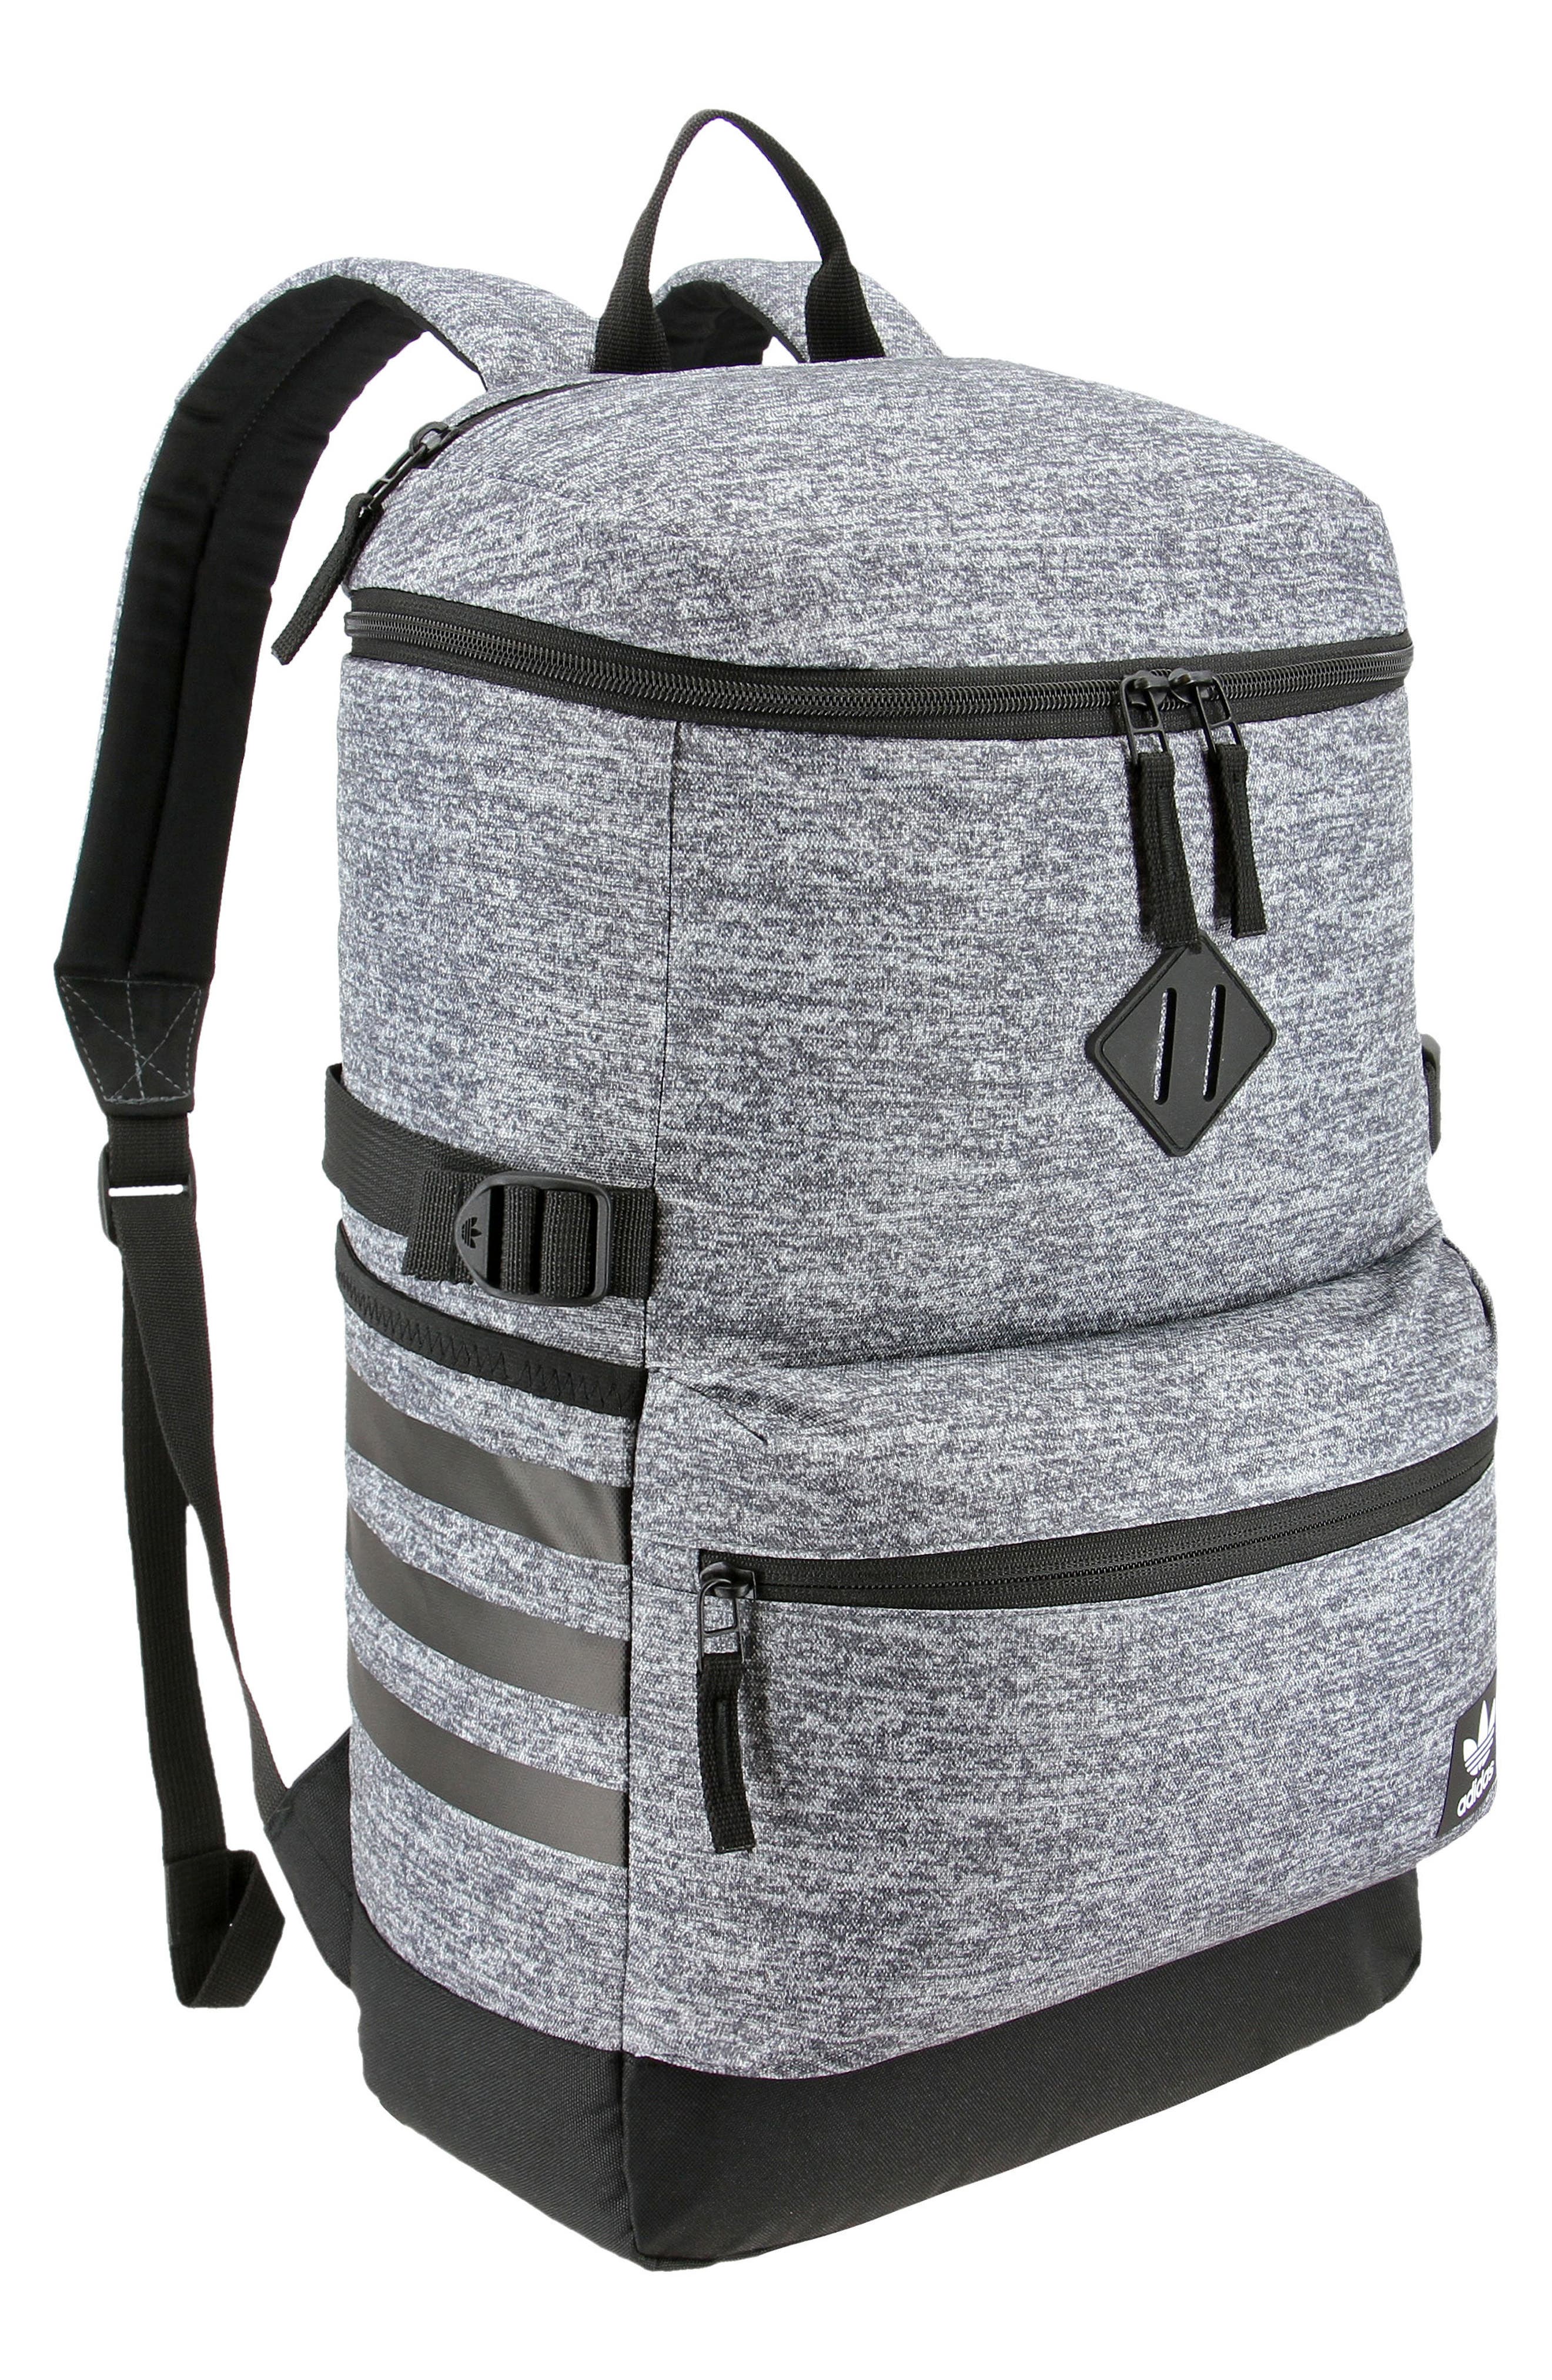 adidas backpack nordstrom